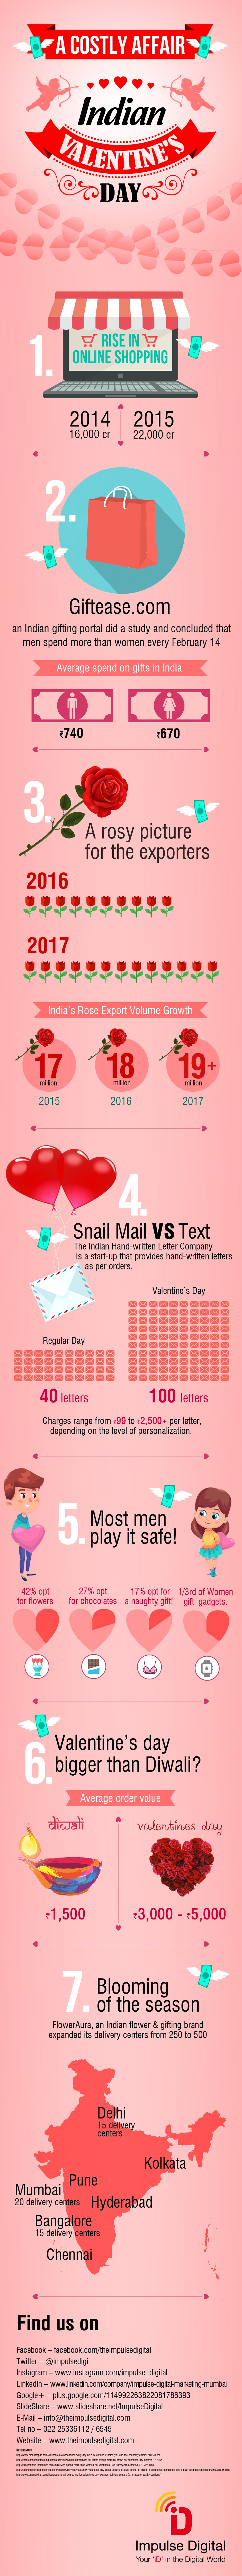 Valentine's Day India Infographic 